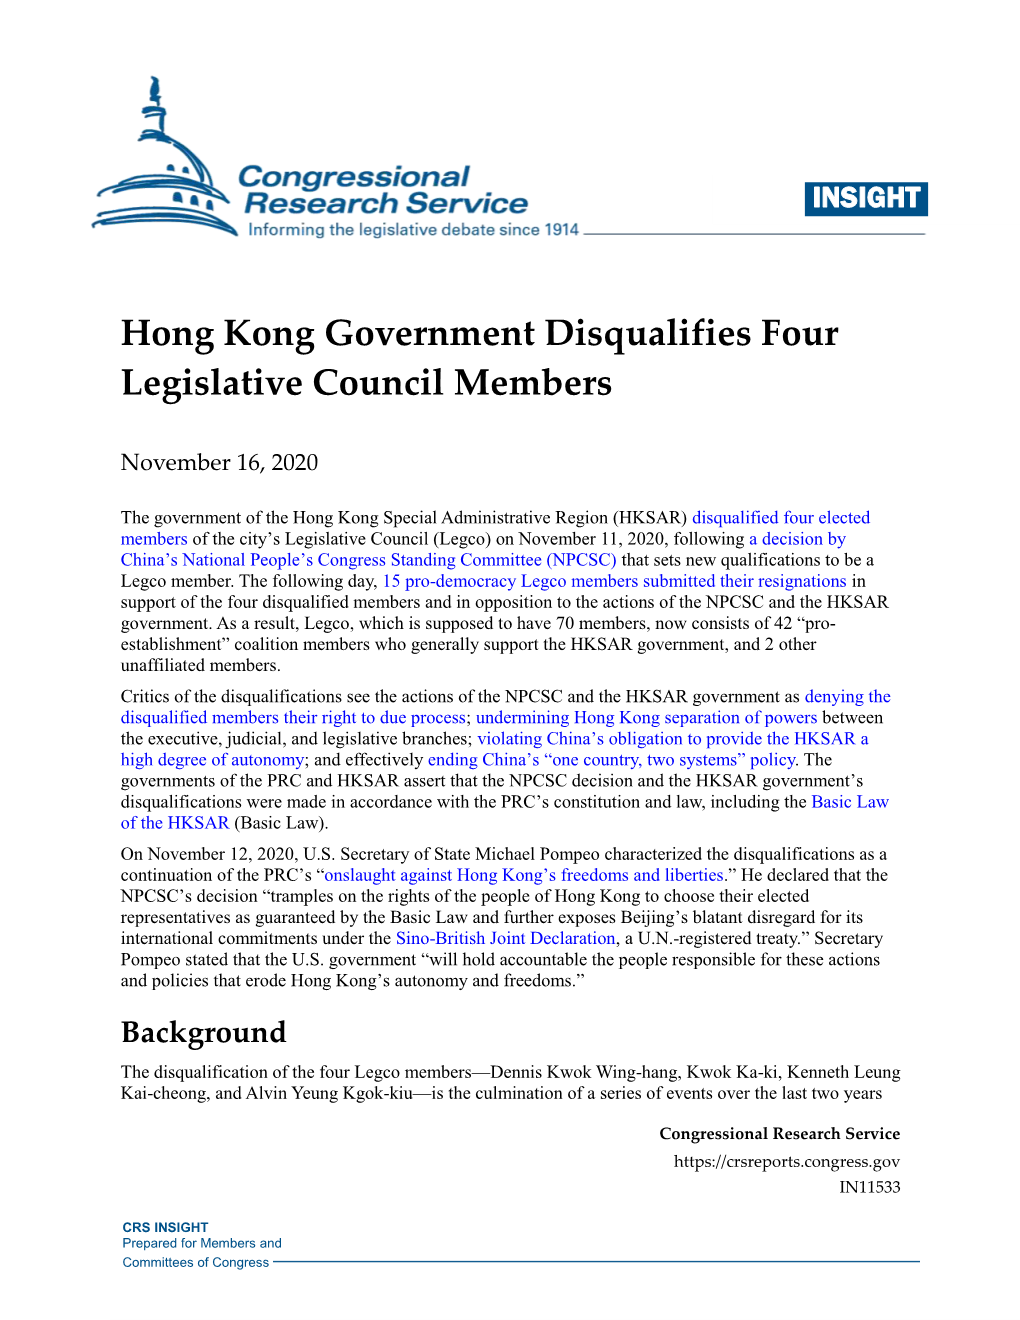 Hong Kong Government Disqualifies Four Legislative Council Members